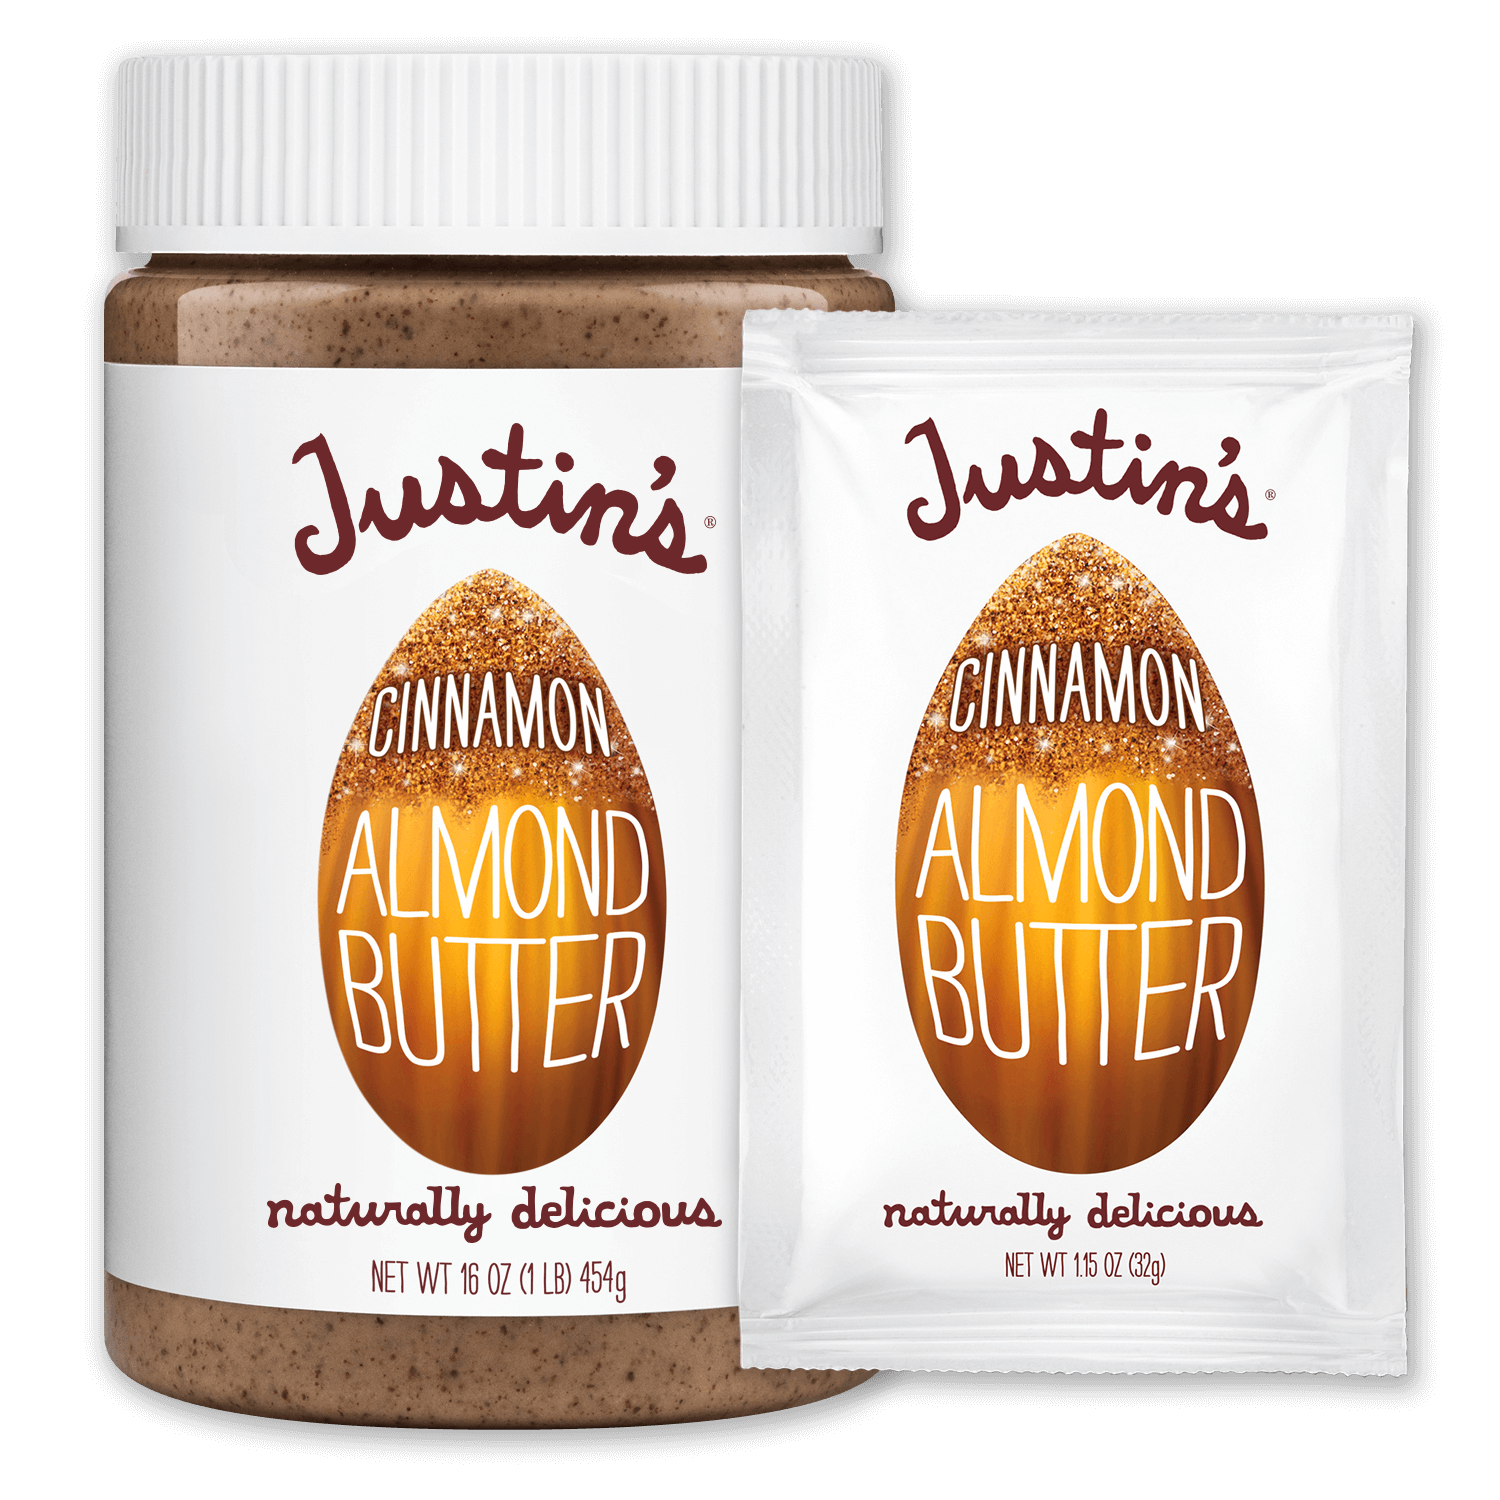 Justin's Cinnamon Almond Butter Spread jar 16 oz. beside Justin's Cinnamon Almond Butter Spread Squeeze Pack 1.15 oz.